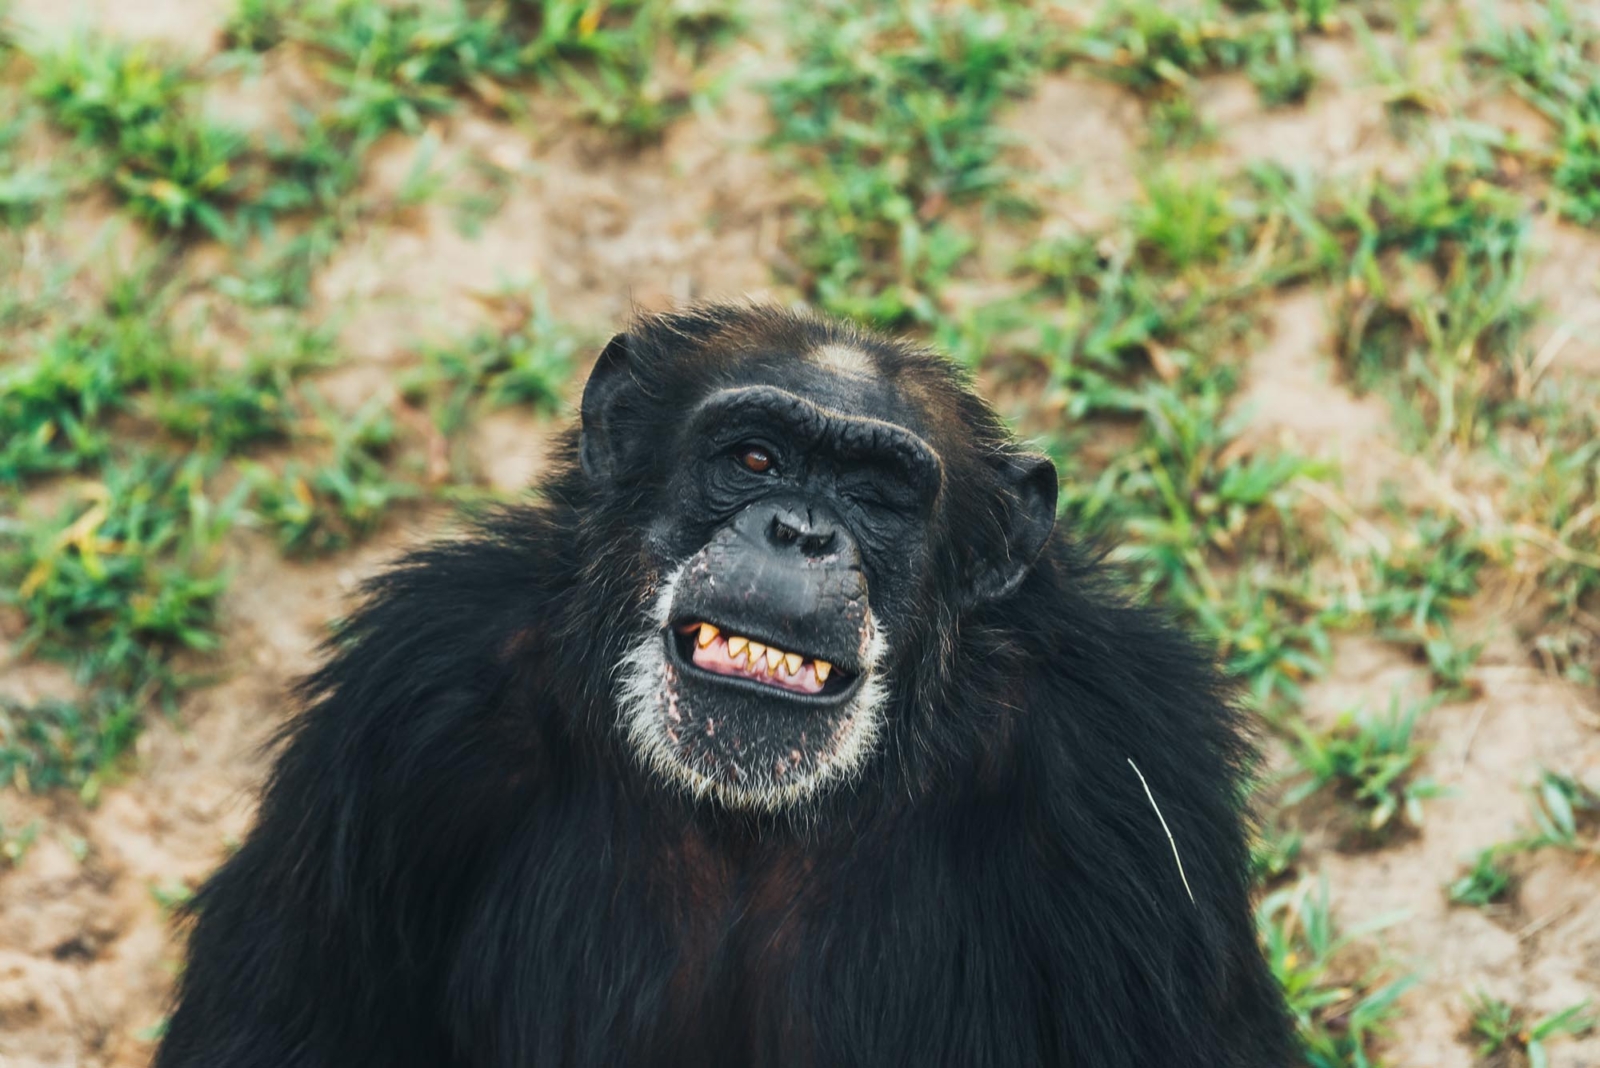 Chimp Smiling for Camera - Crystal